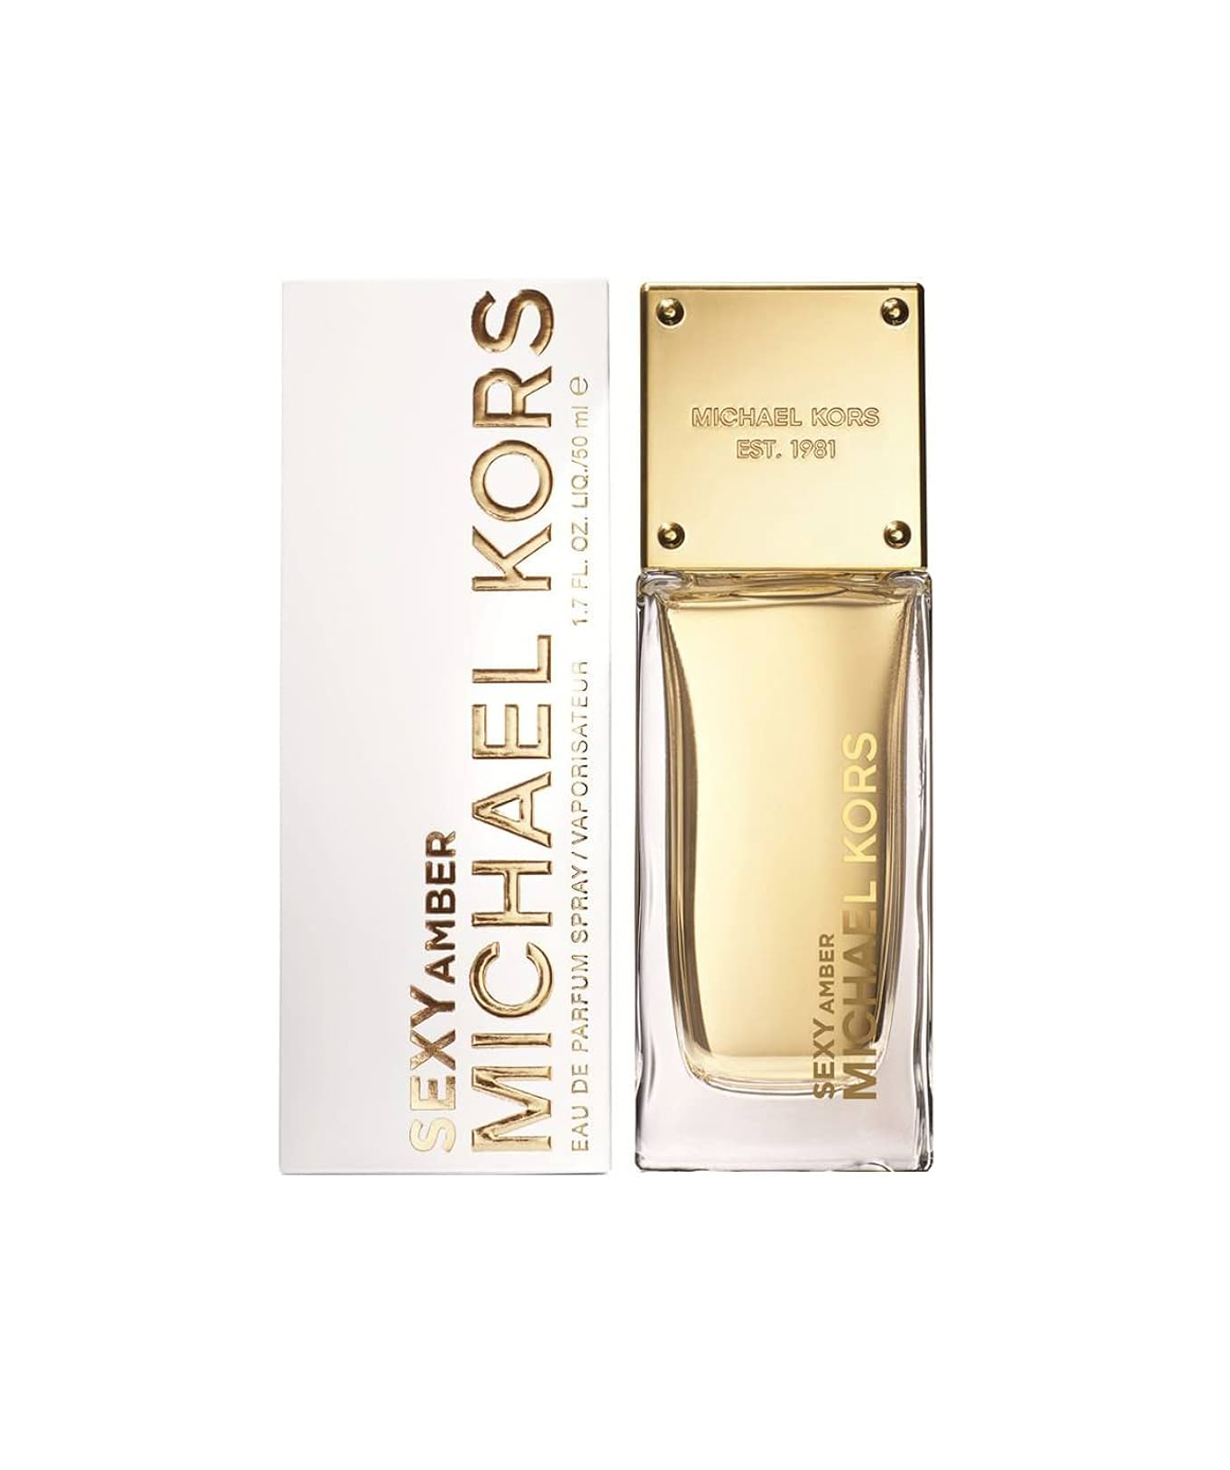 Perfume «Michael Kors» Sexy Amber, for women, 50 ml